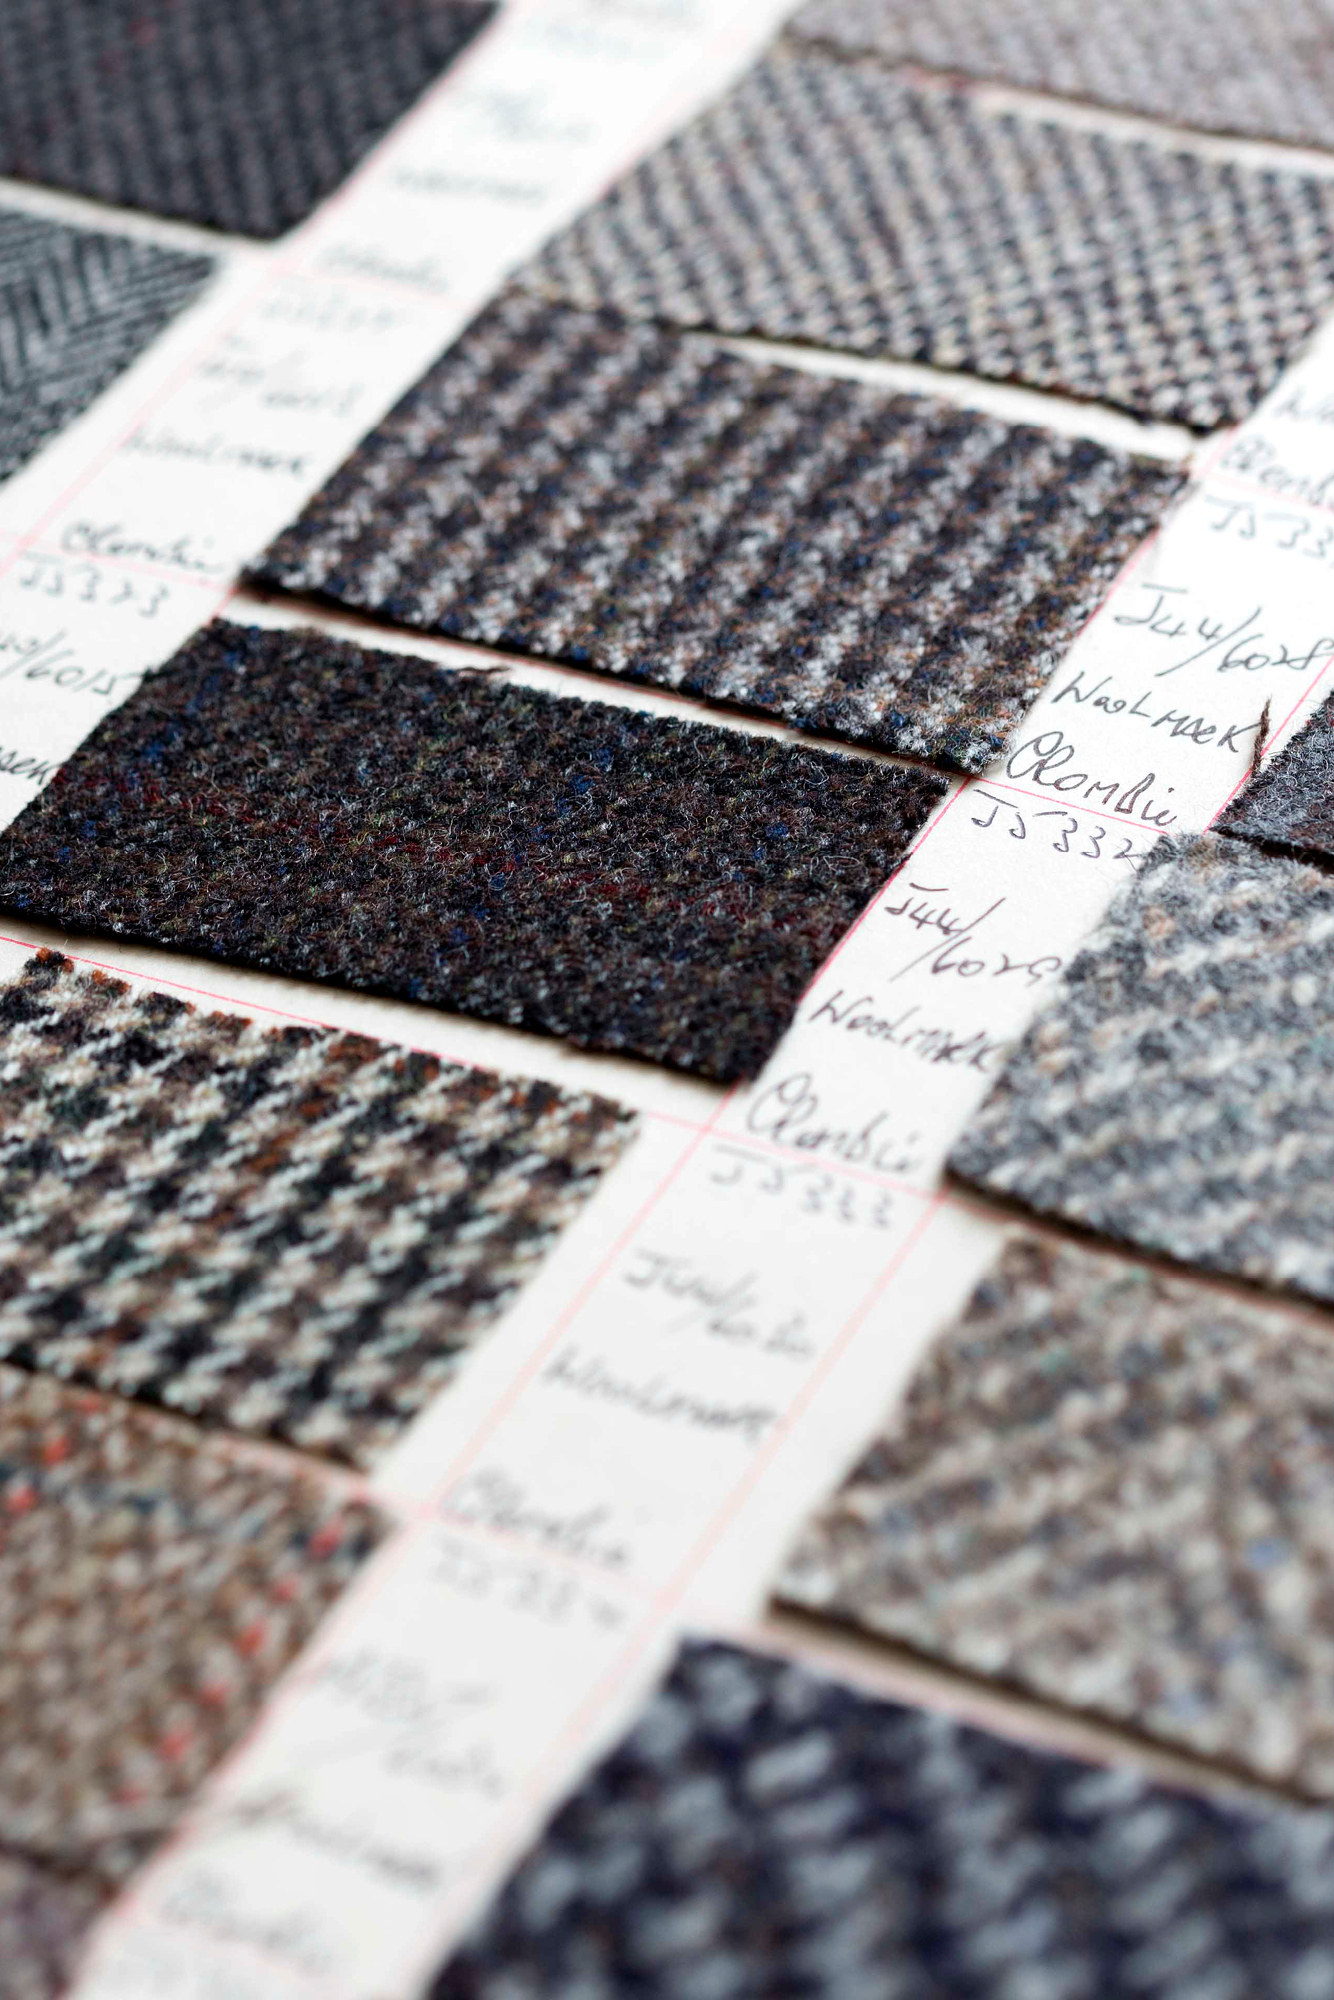 The company has made woollen tweeds since 1797.